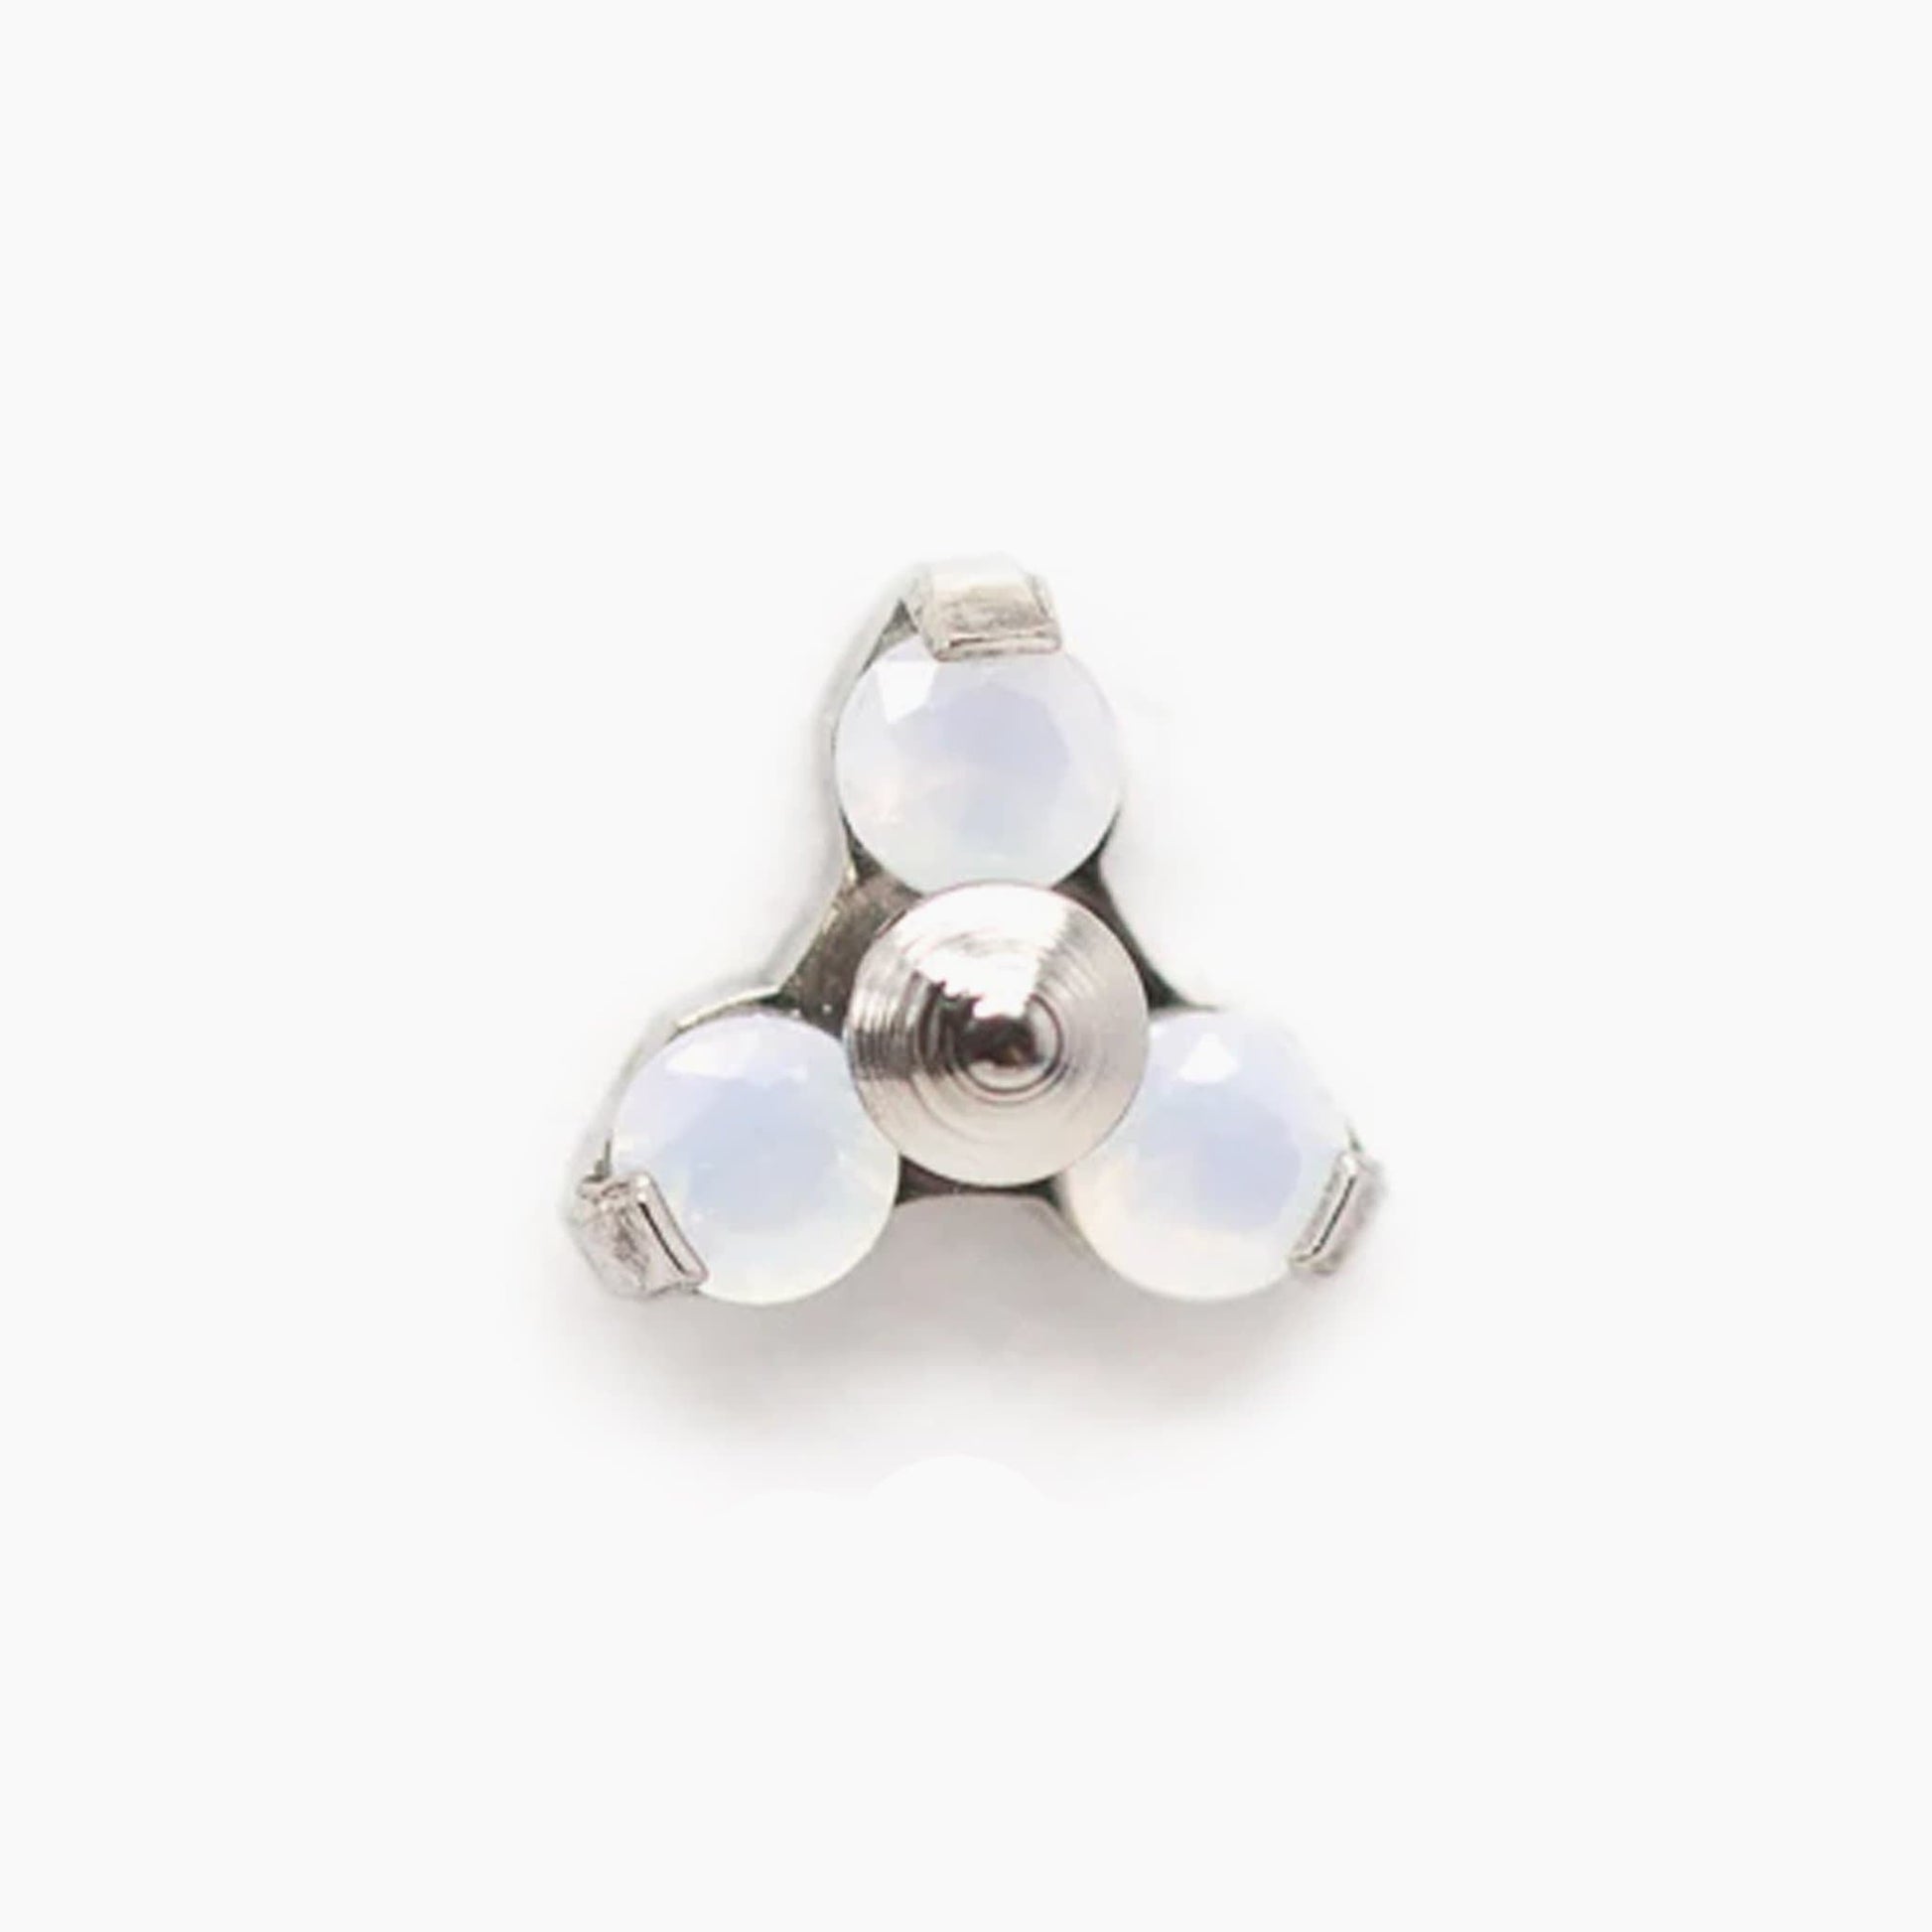 Trinity 3 Gem Cluster | Titanium Threadless Top For Nose, Ears & Lip - Avanti Body Jewelry